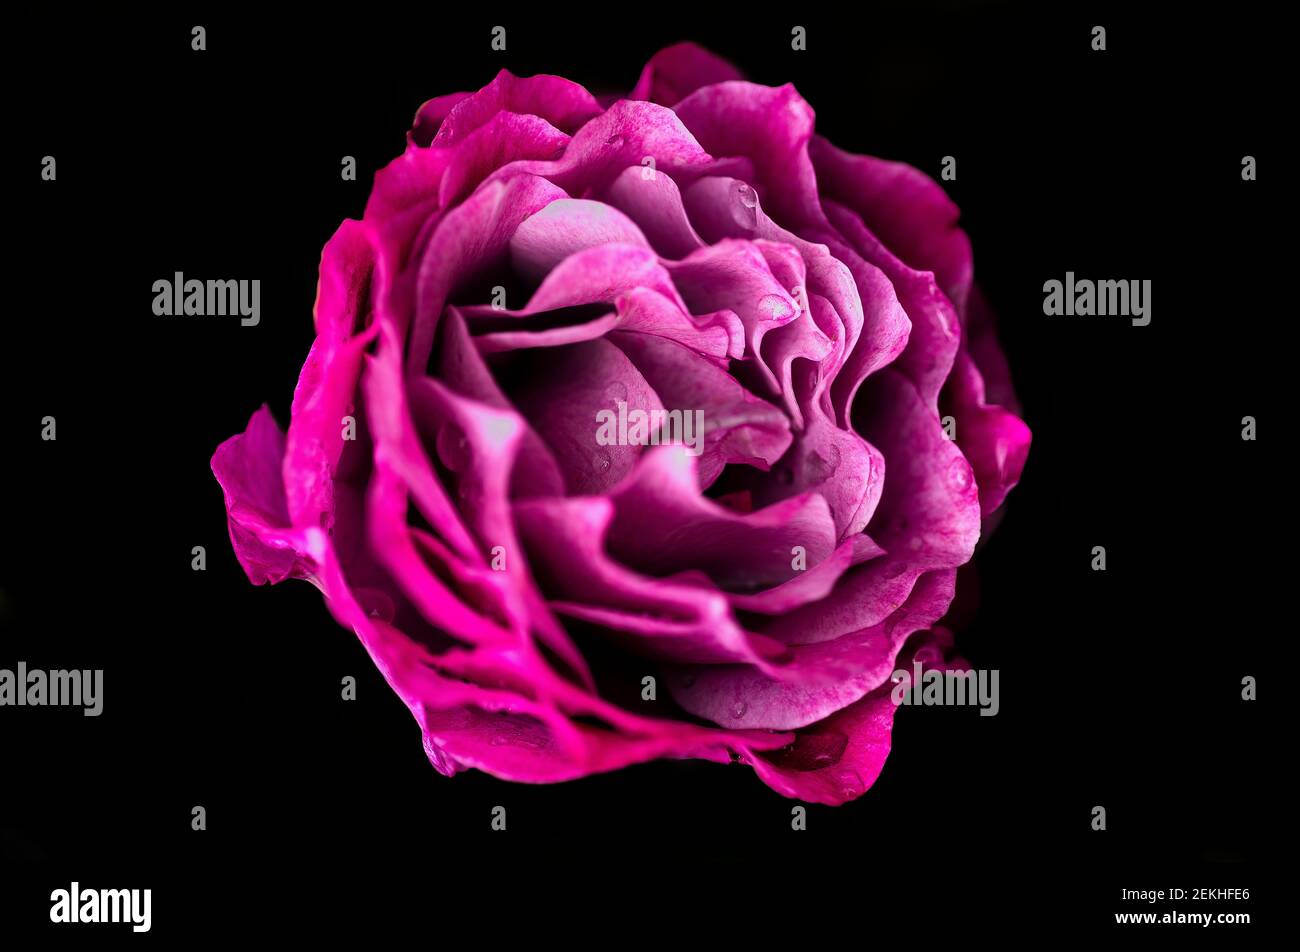 Magenta rose flower head in black background Stock Photo